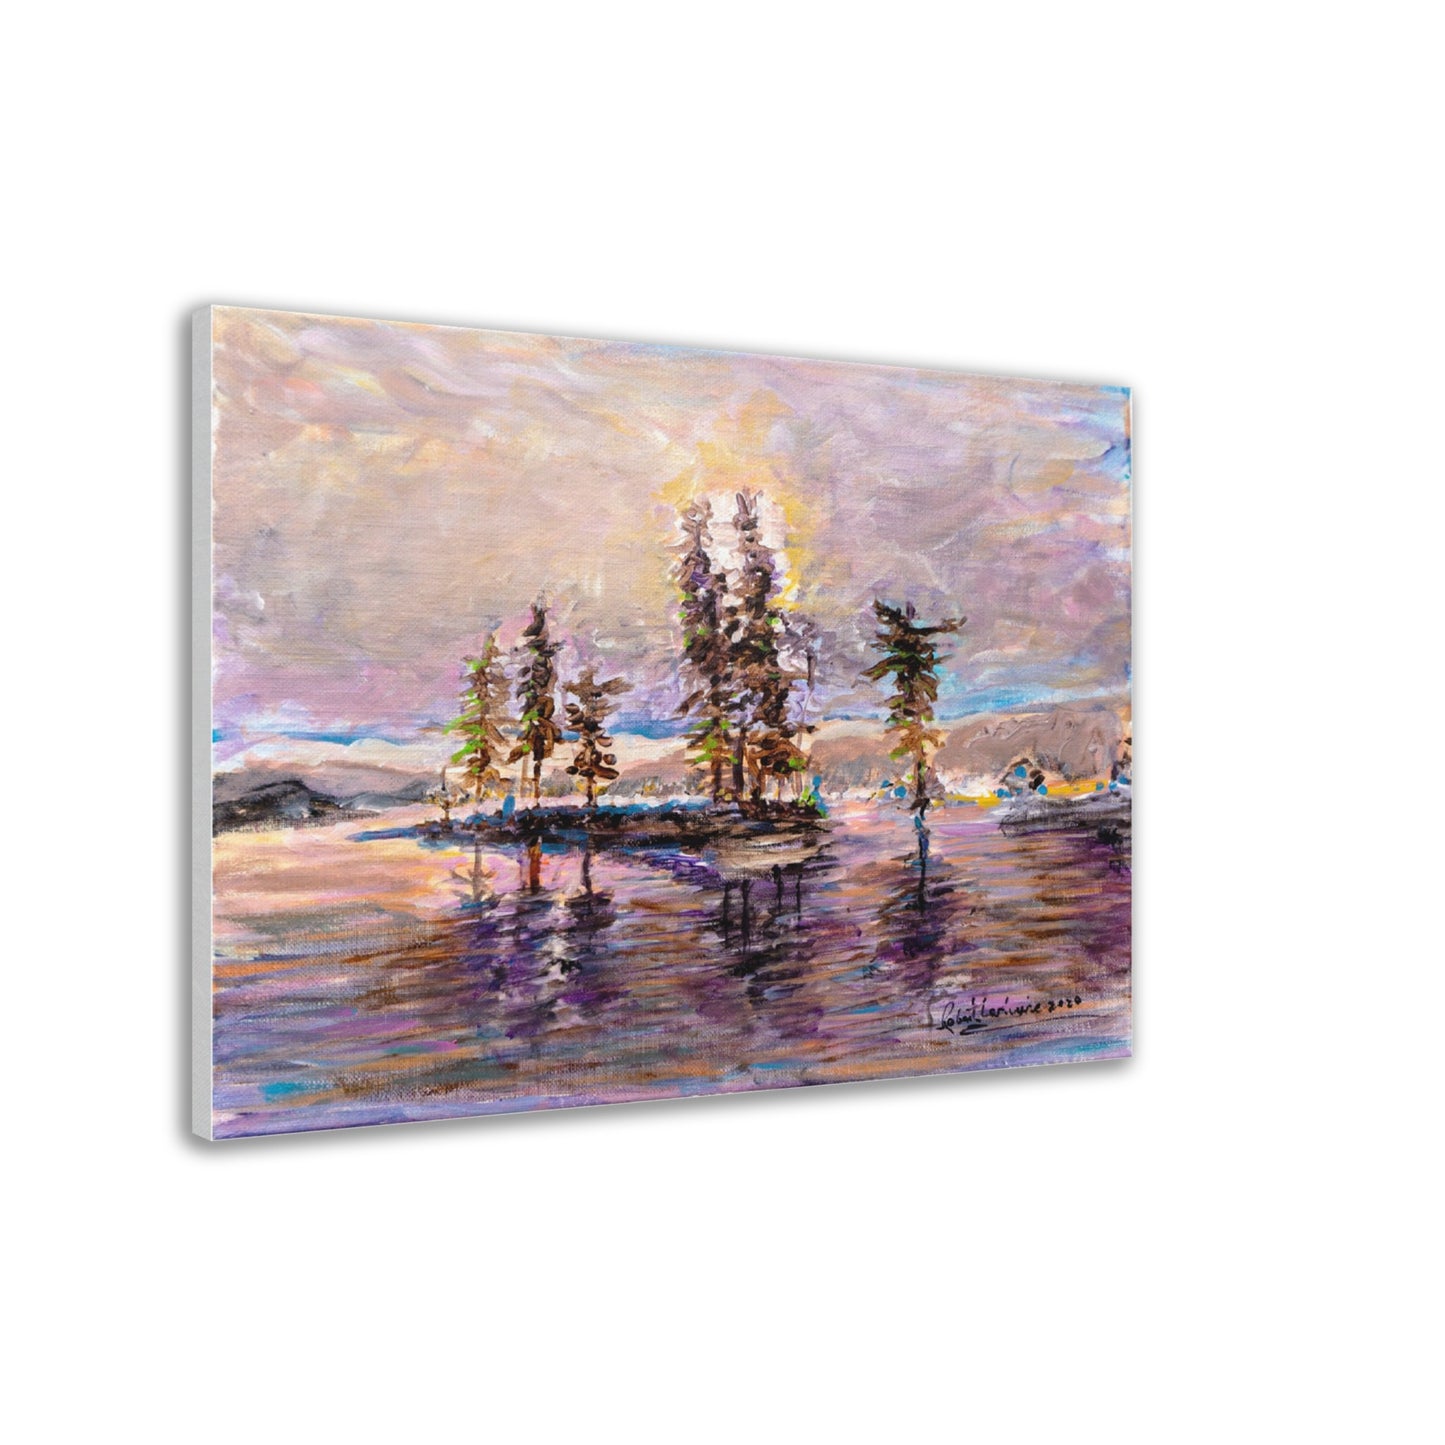 Georgian Bay #1 - Canvas